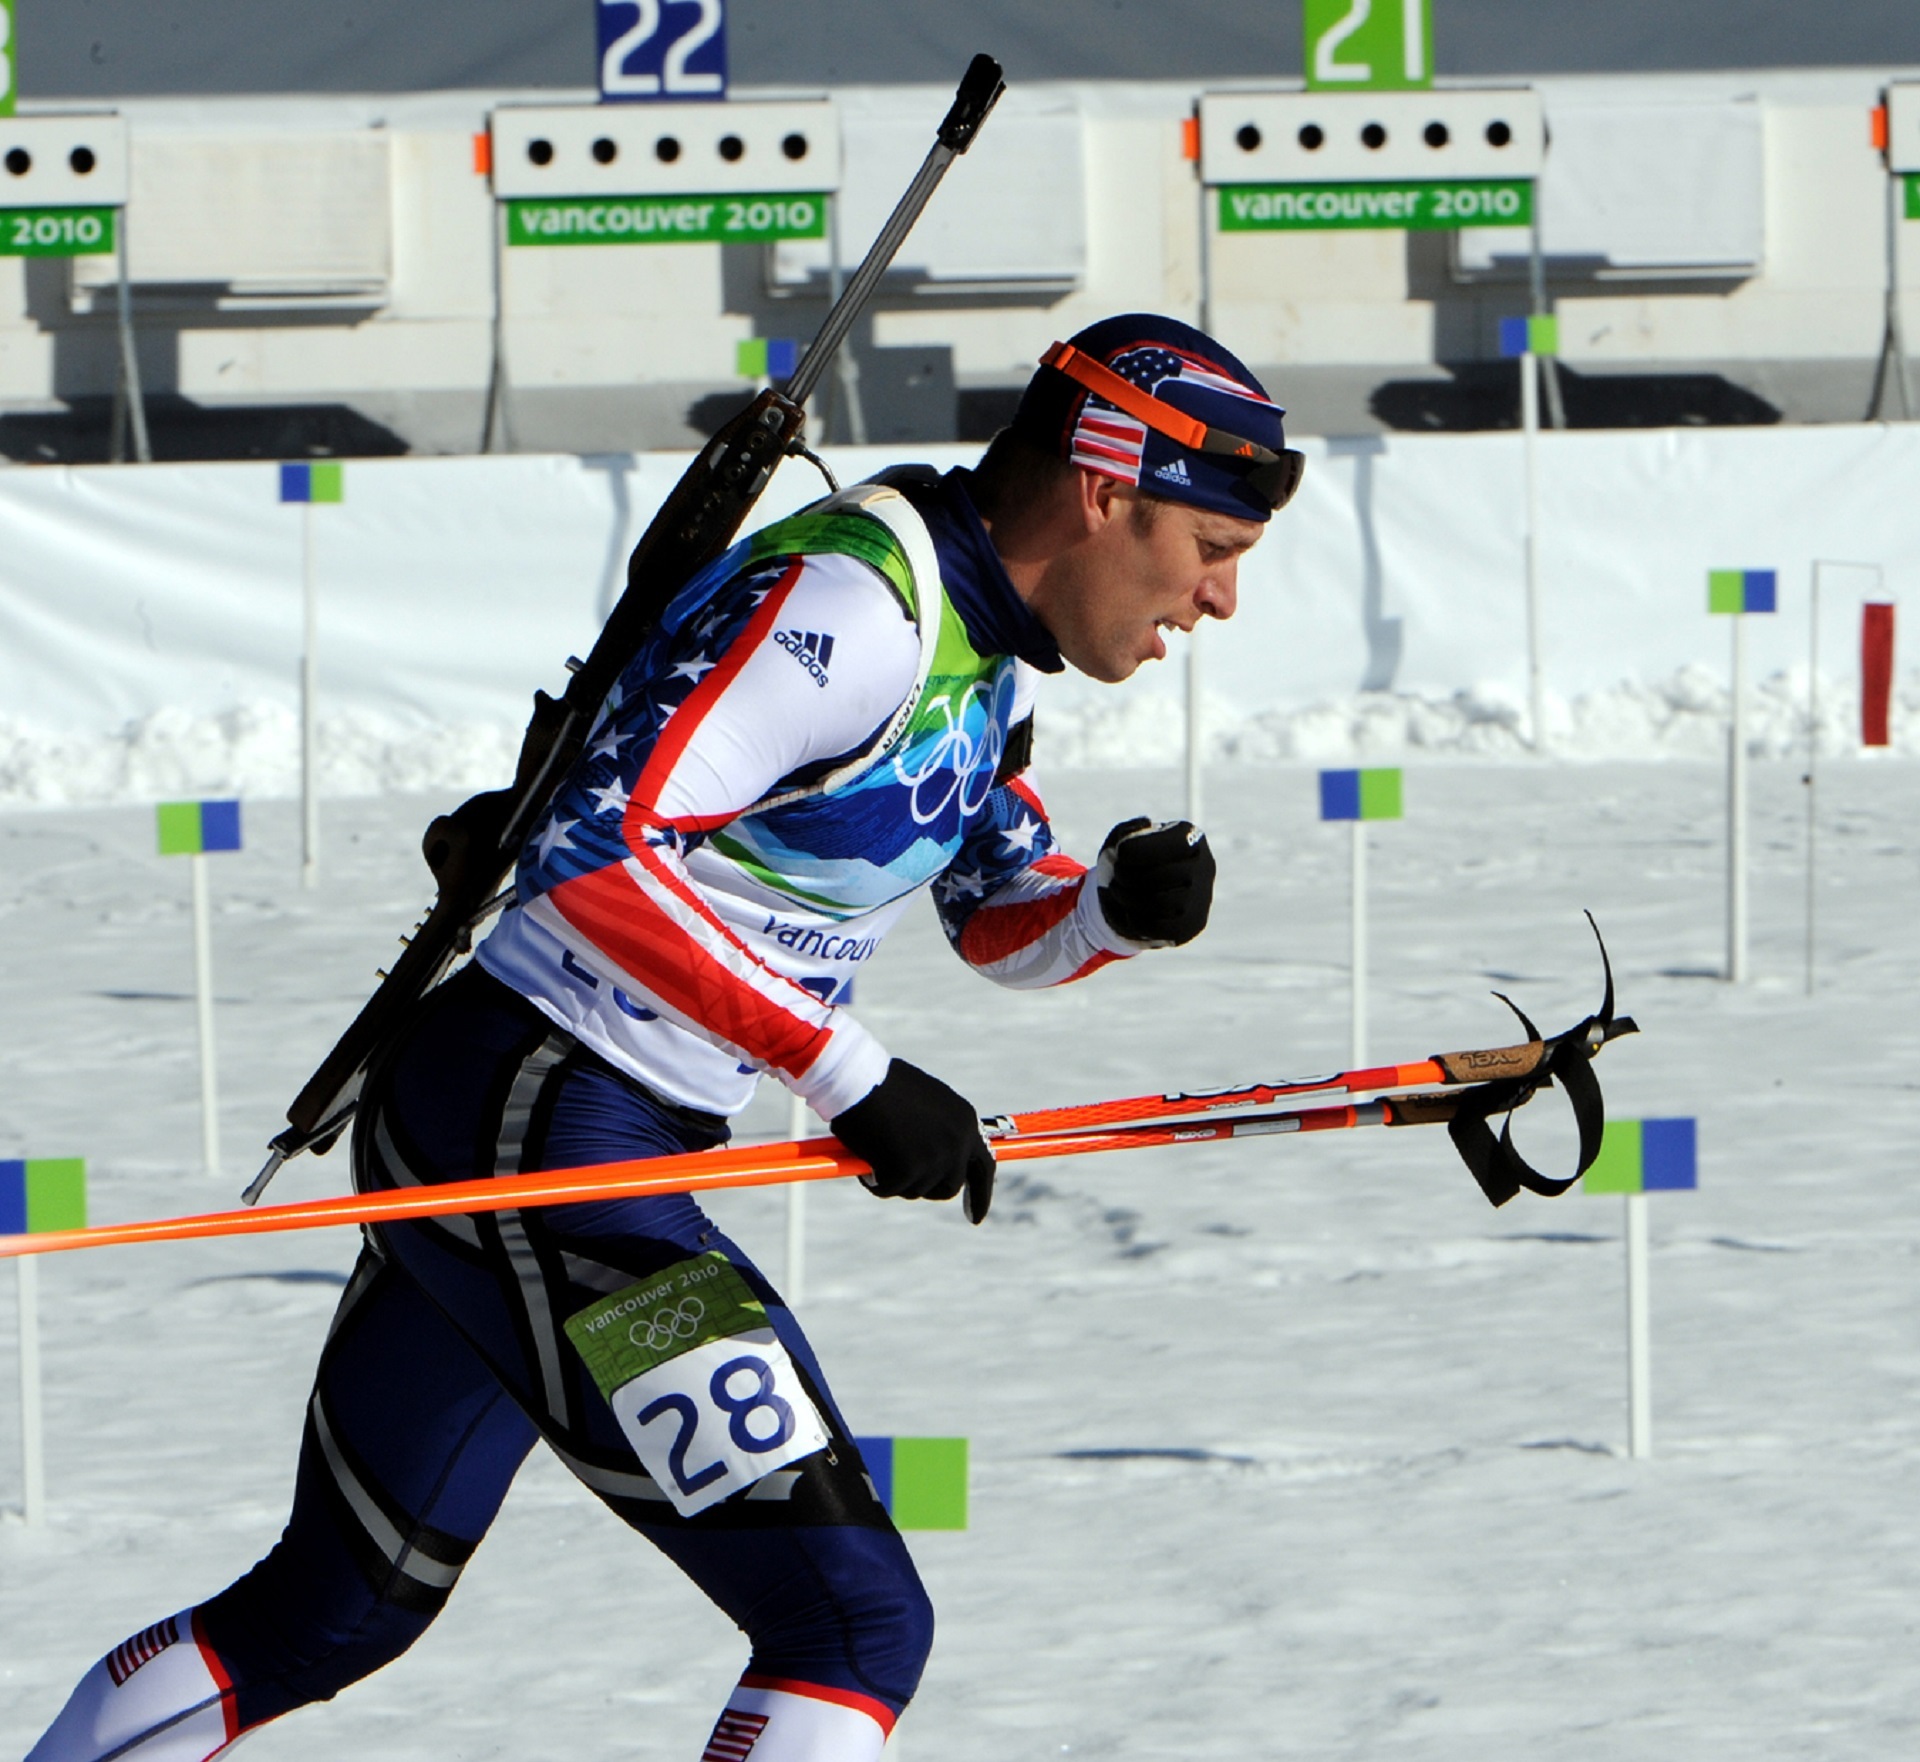 Biathlon Race, Activity, Frozen, Ski, Skiing, HQ Photo